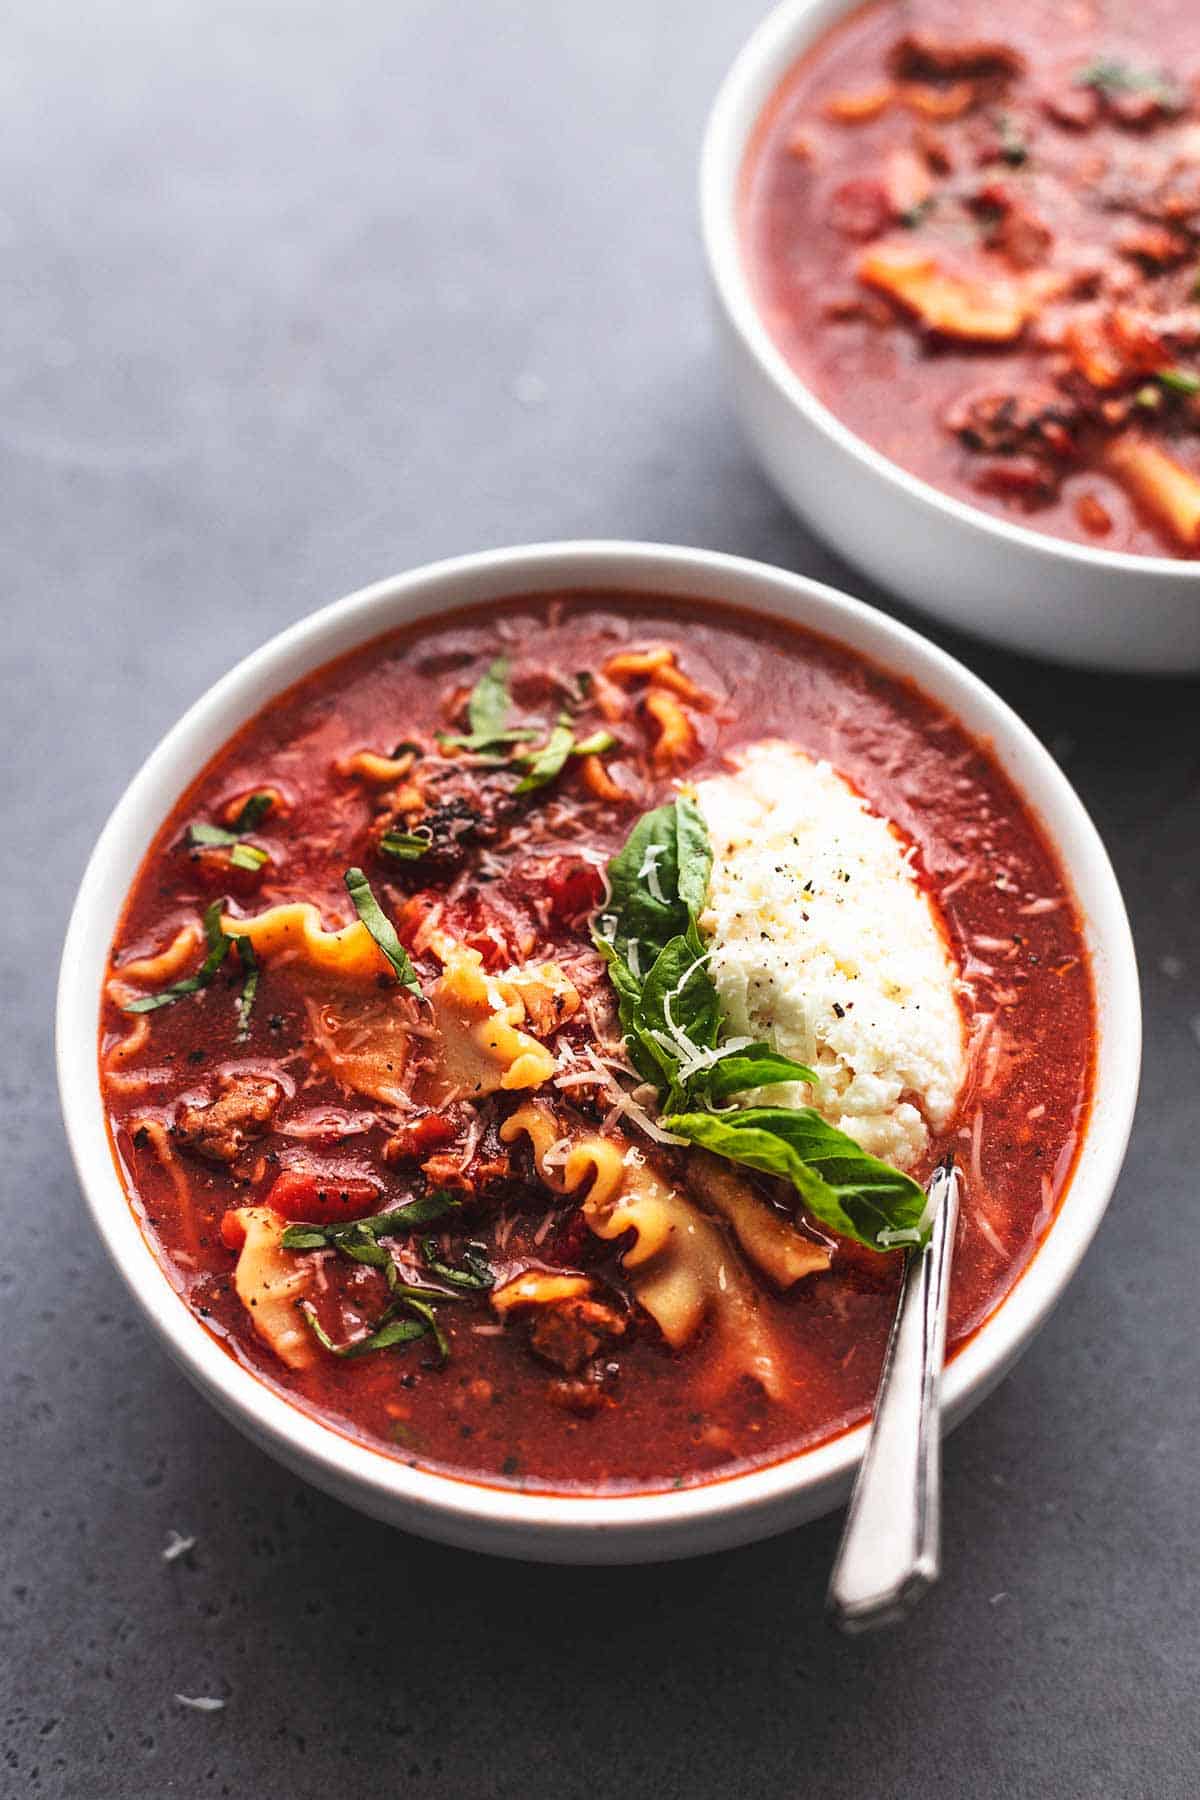 lasagna soup in bowl with spoon, ricotta, and fresh basil garnish